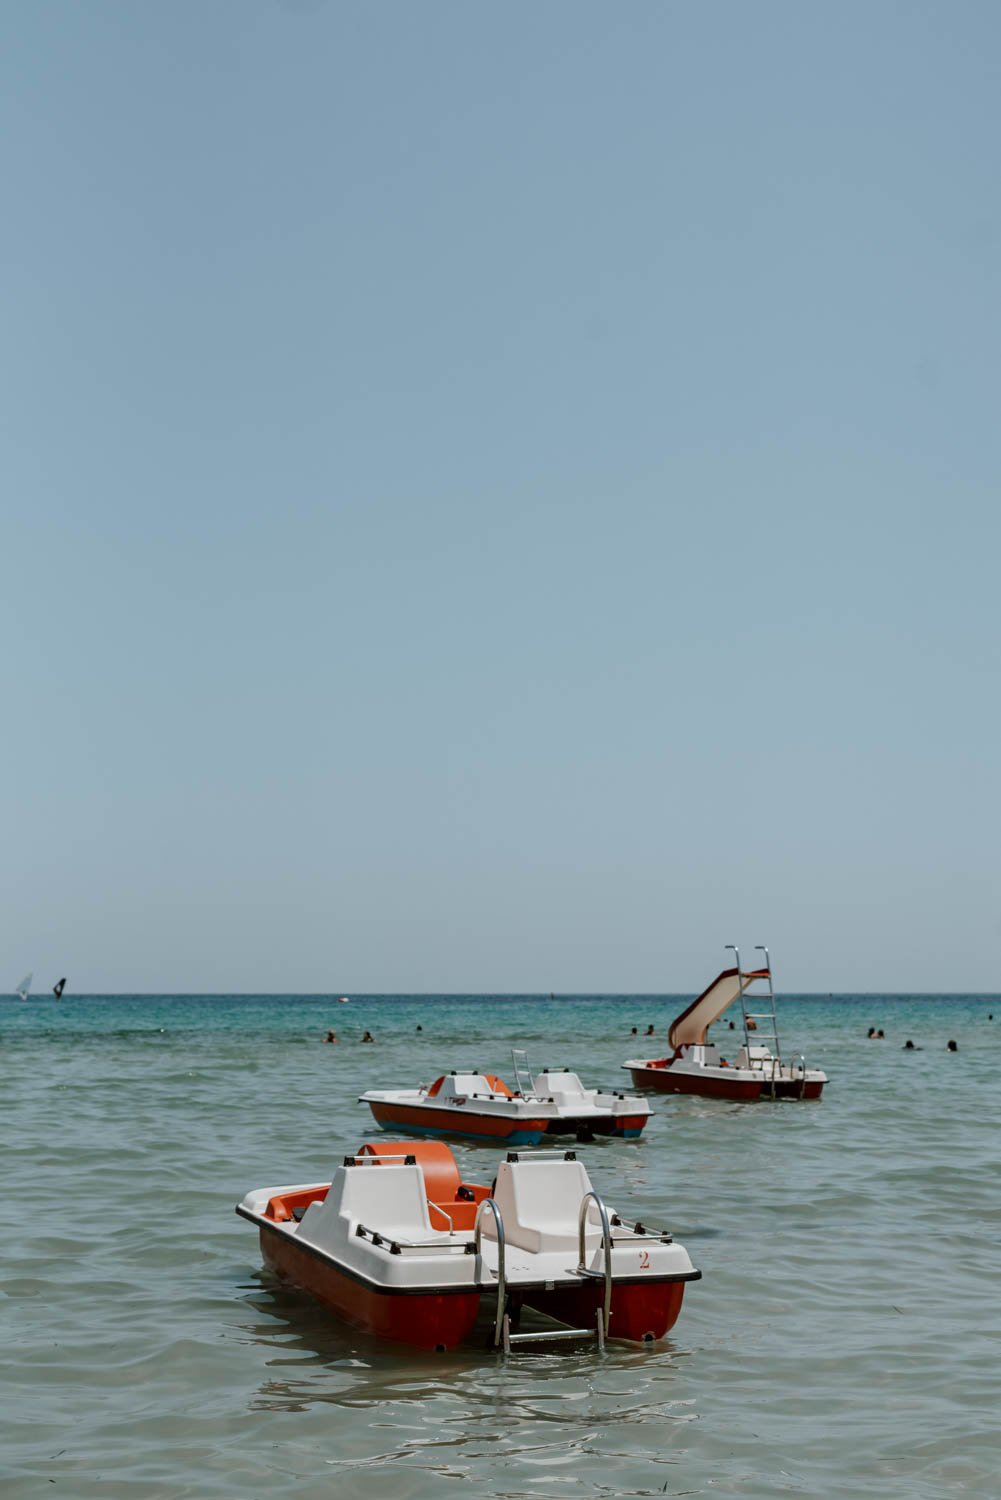 Mondello Beach from Palermo